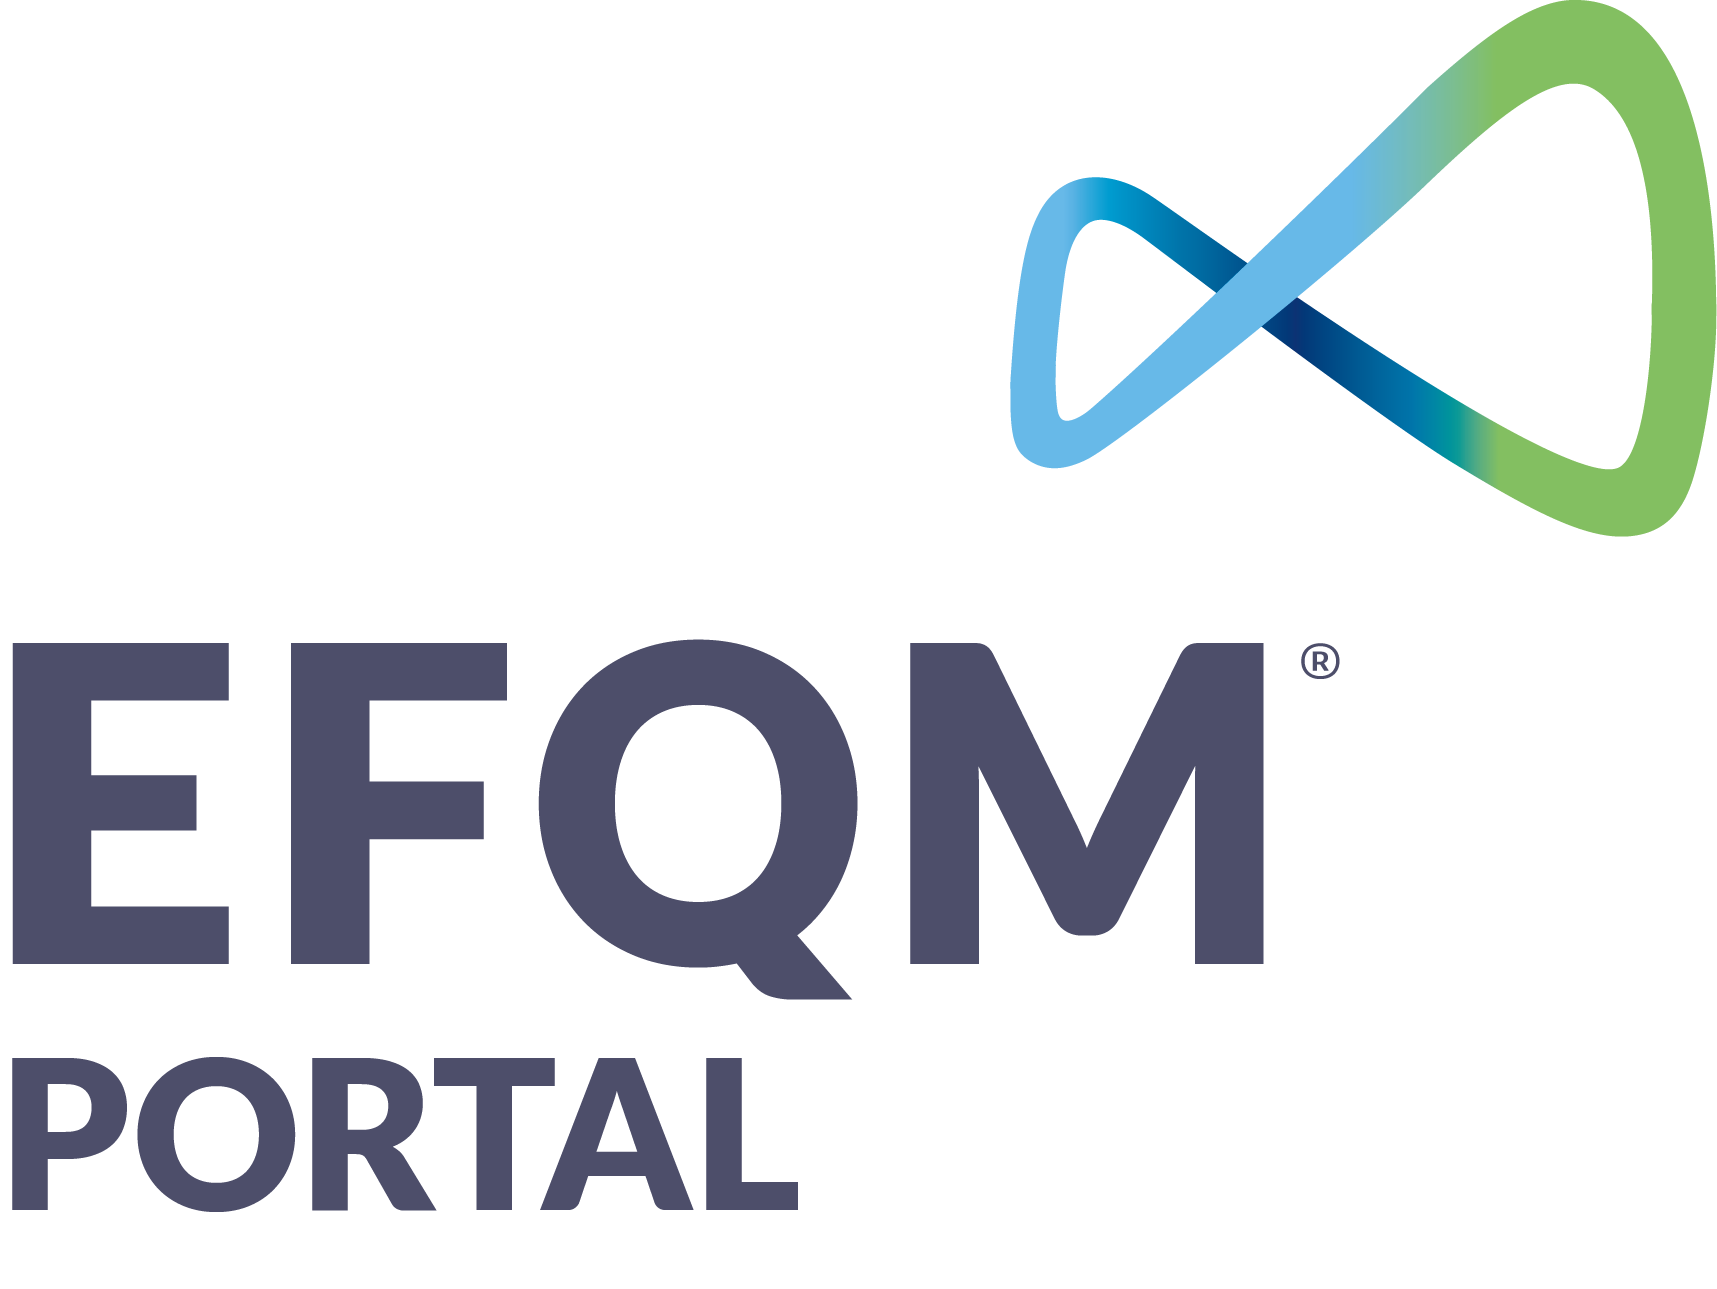 EFQM Portal